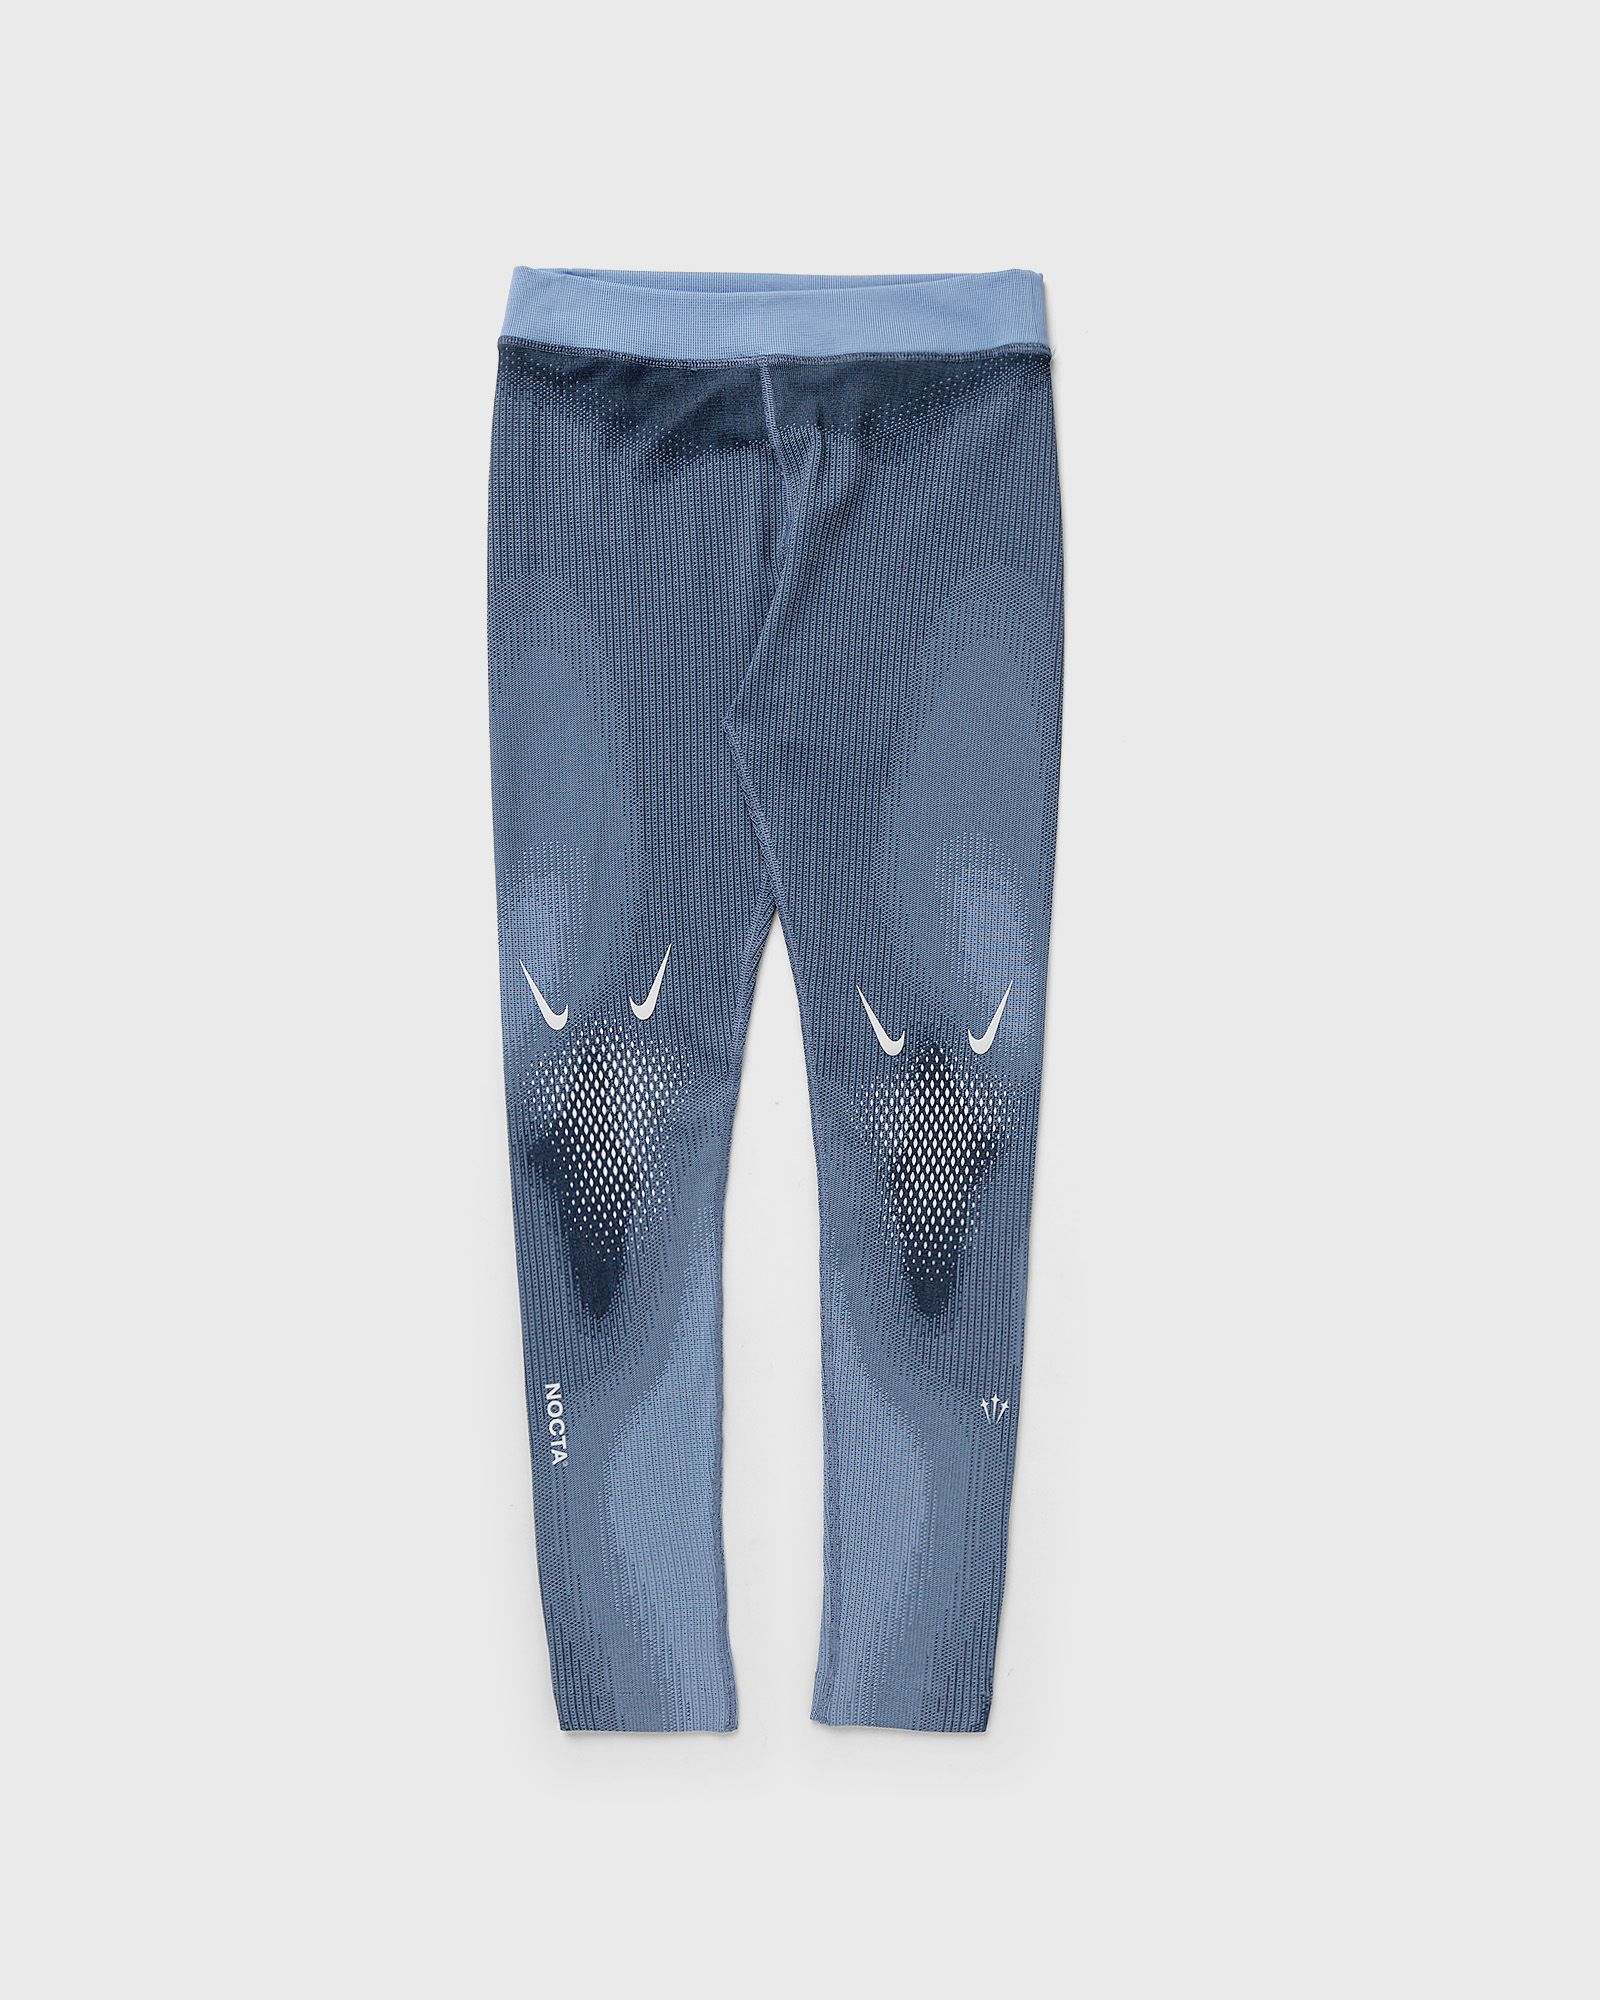 Nike - x nocta nrg knit tight men casual pants blue in größe:xxl